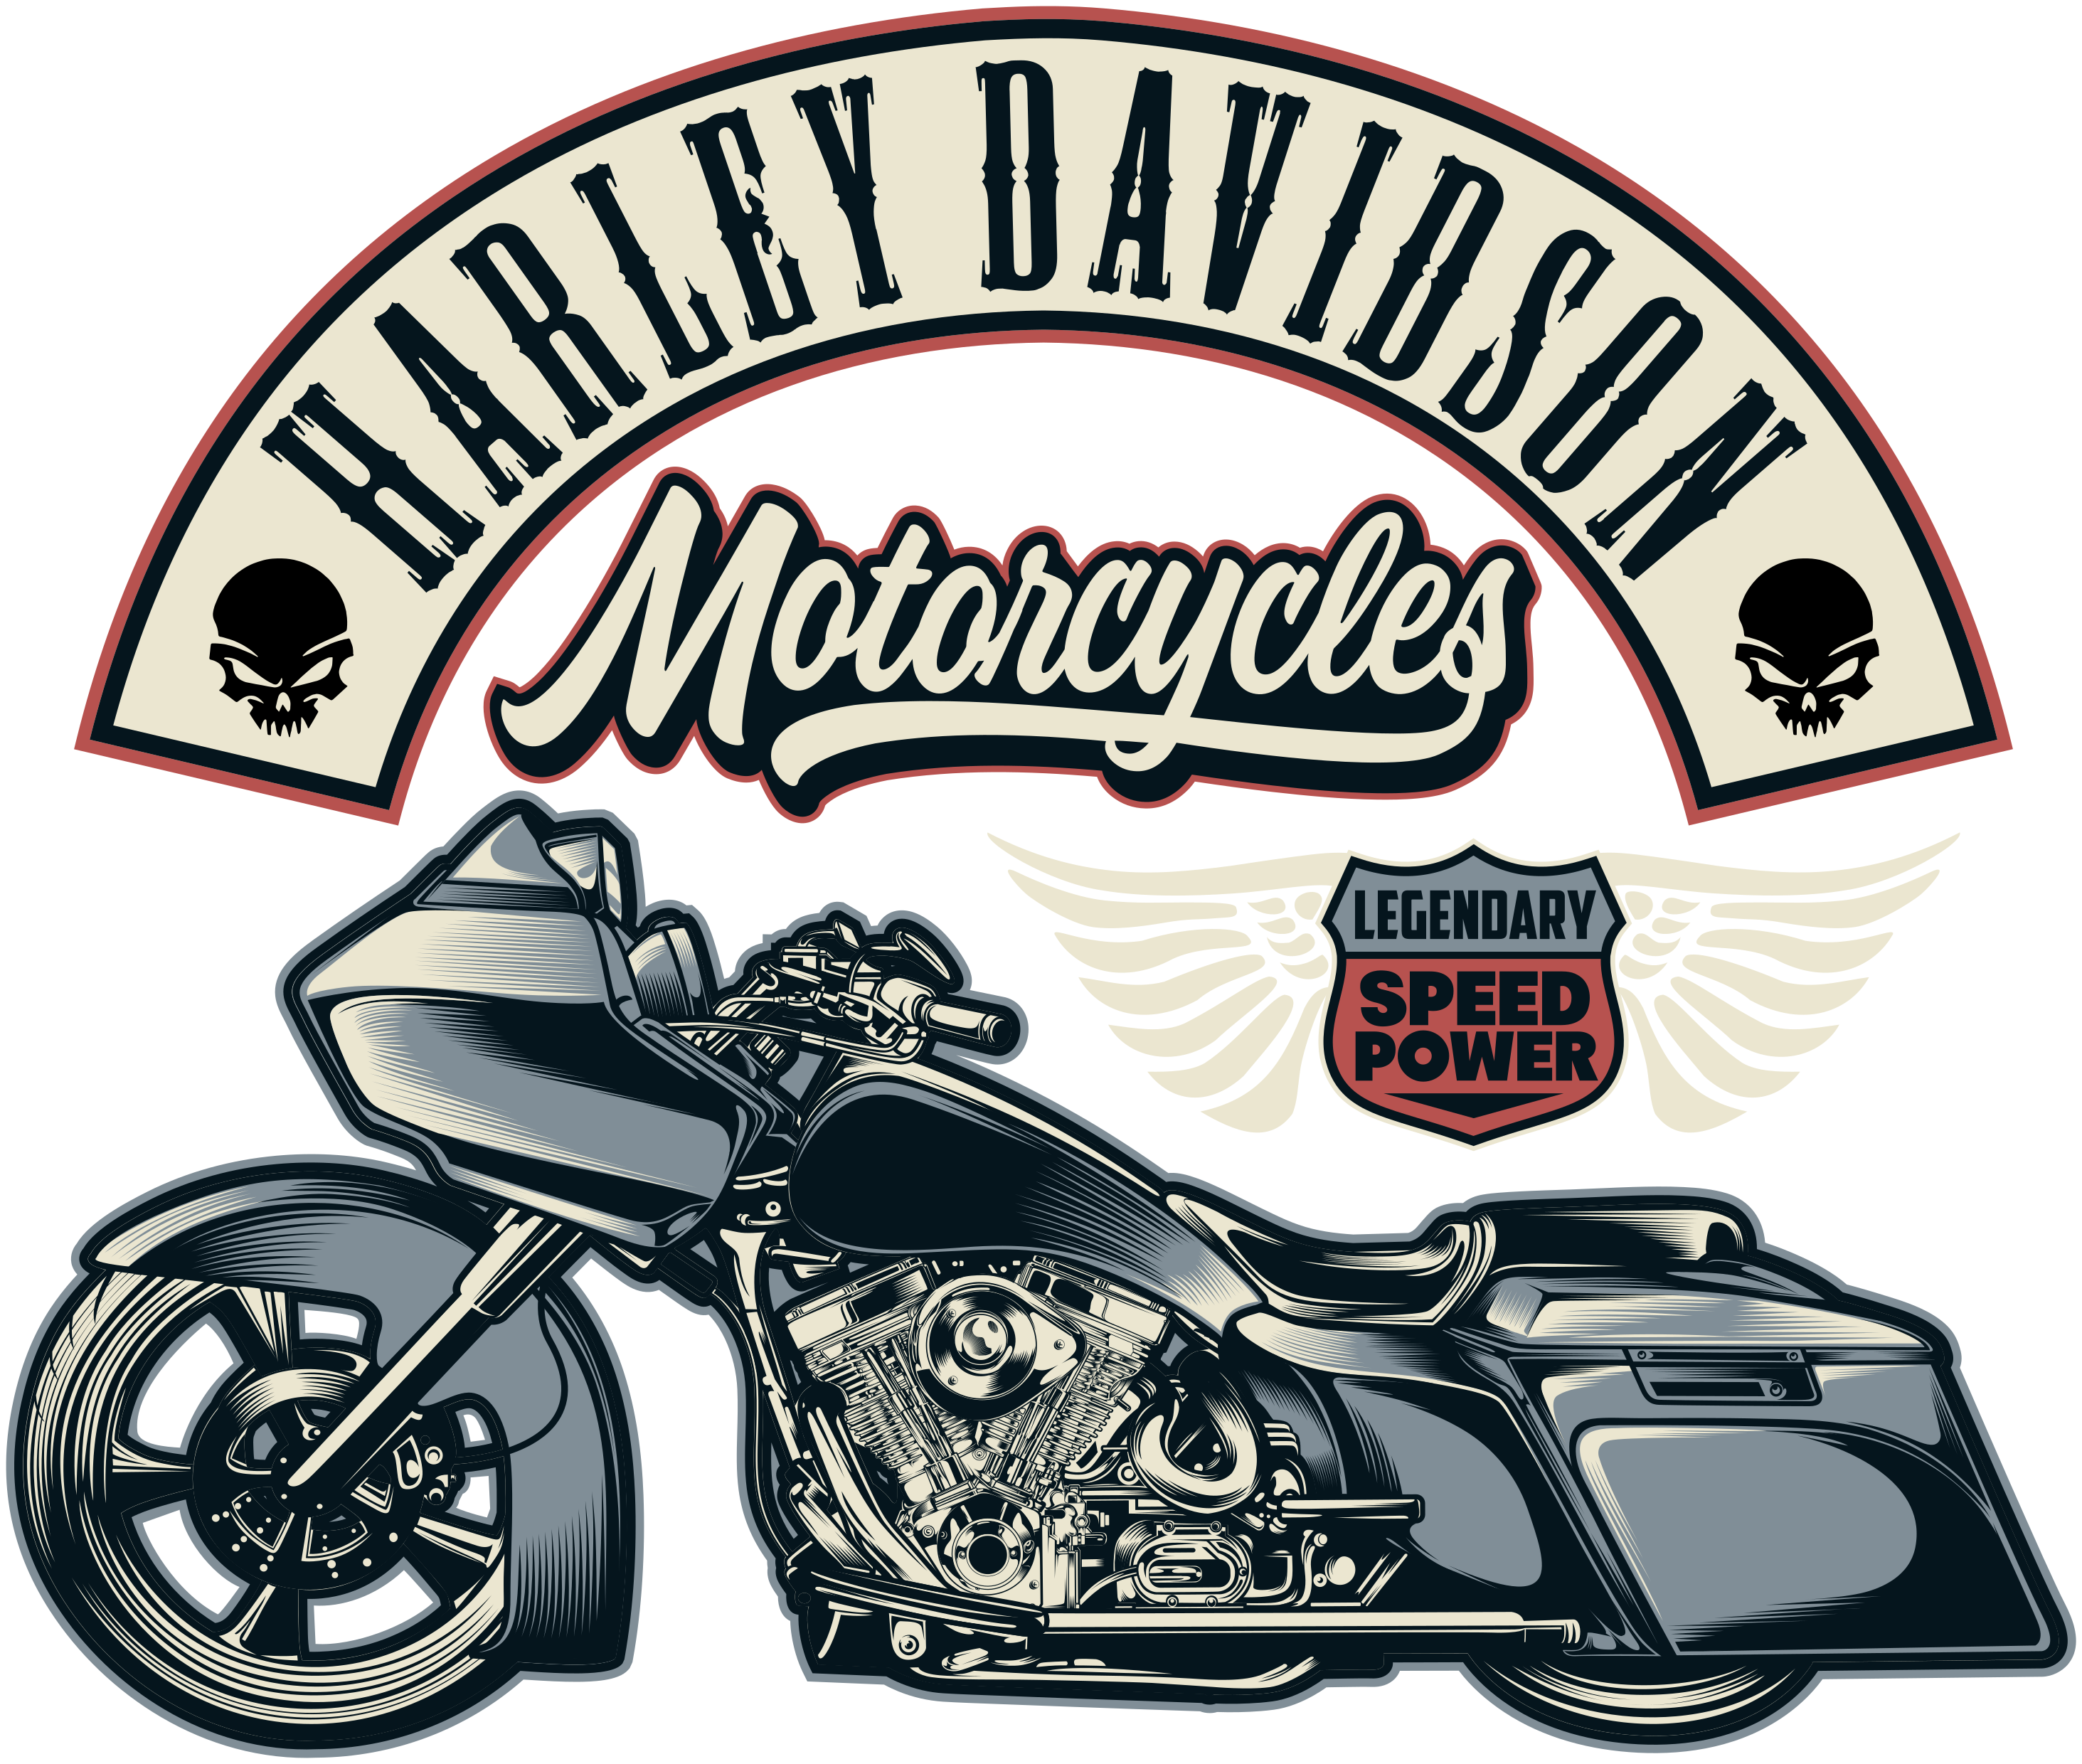 Harley Davidson Motorcycle Tank Vinyl decal design